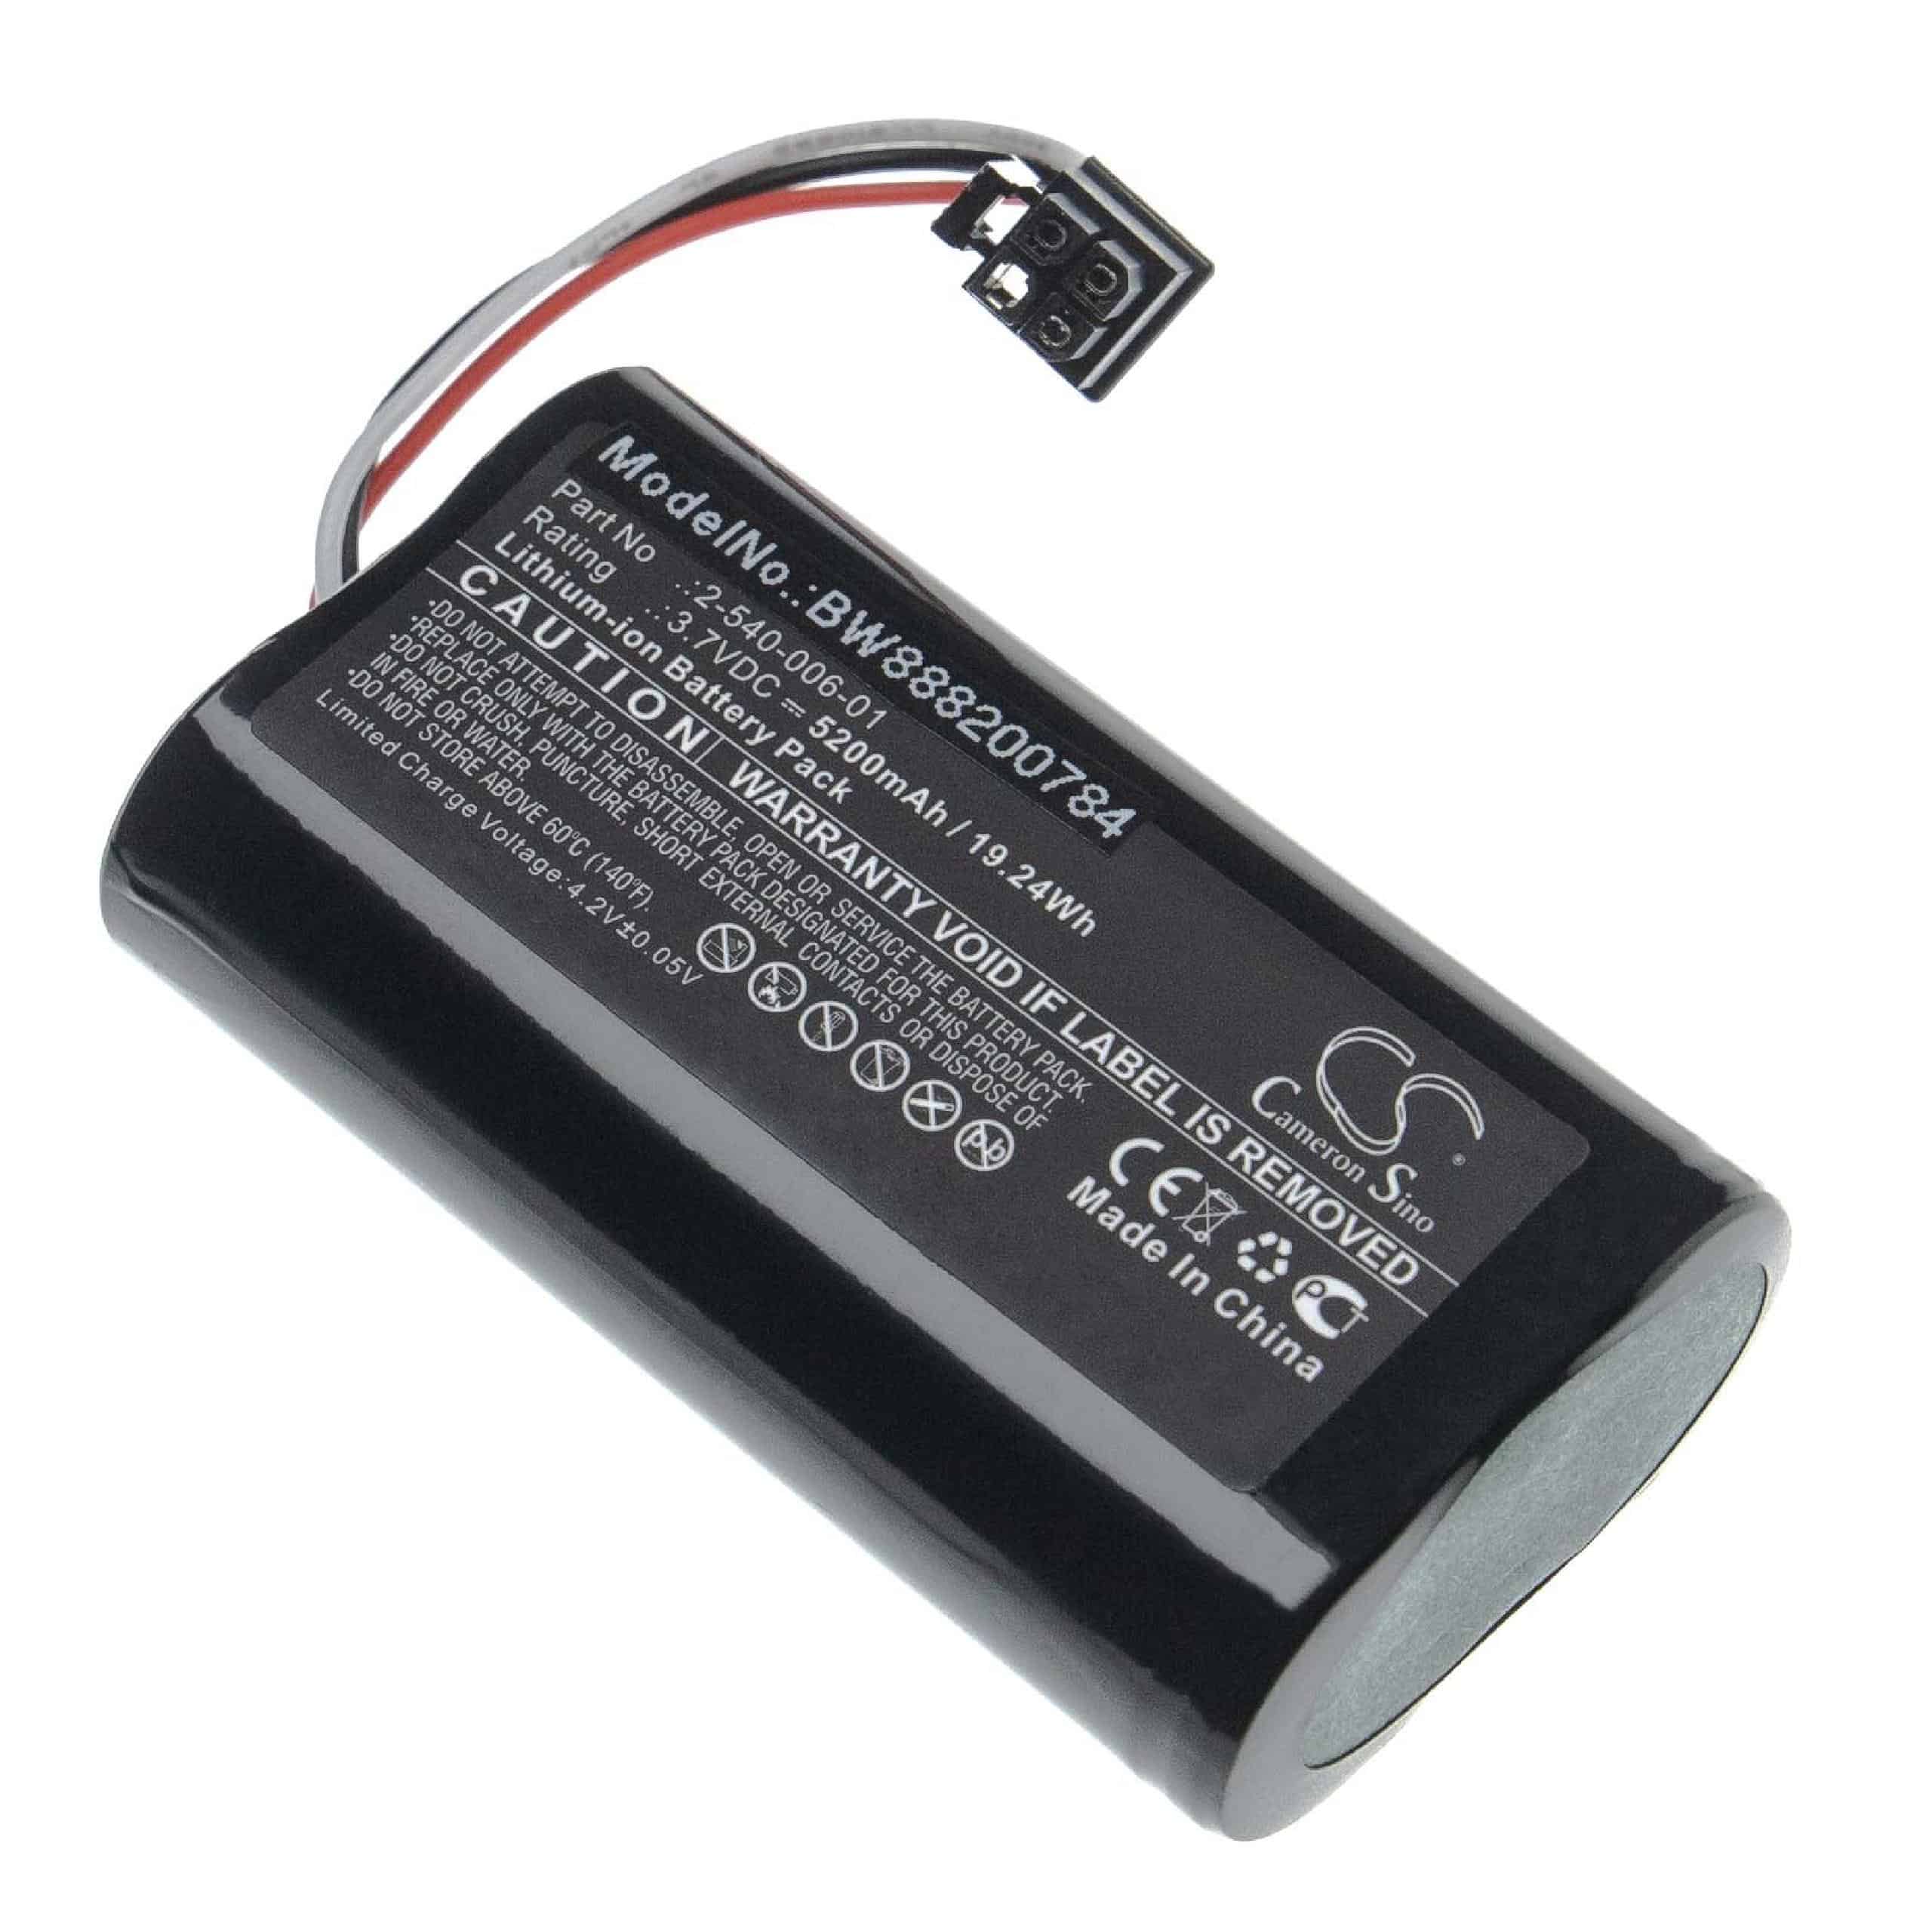 Batería reemplaza Soundcast 2-540-006-01 para altavoces Soundcast - 5200 mAh 3,7 V Li-Ion